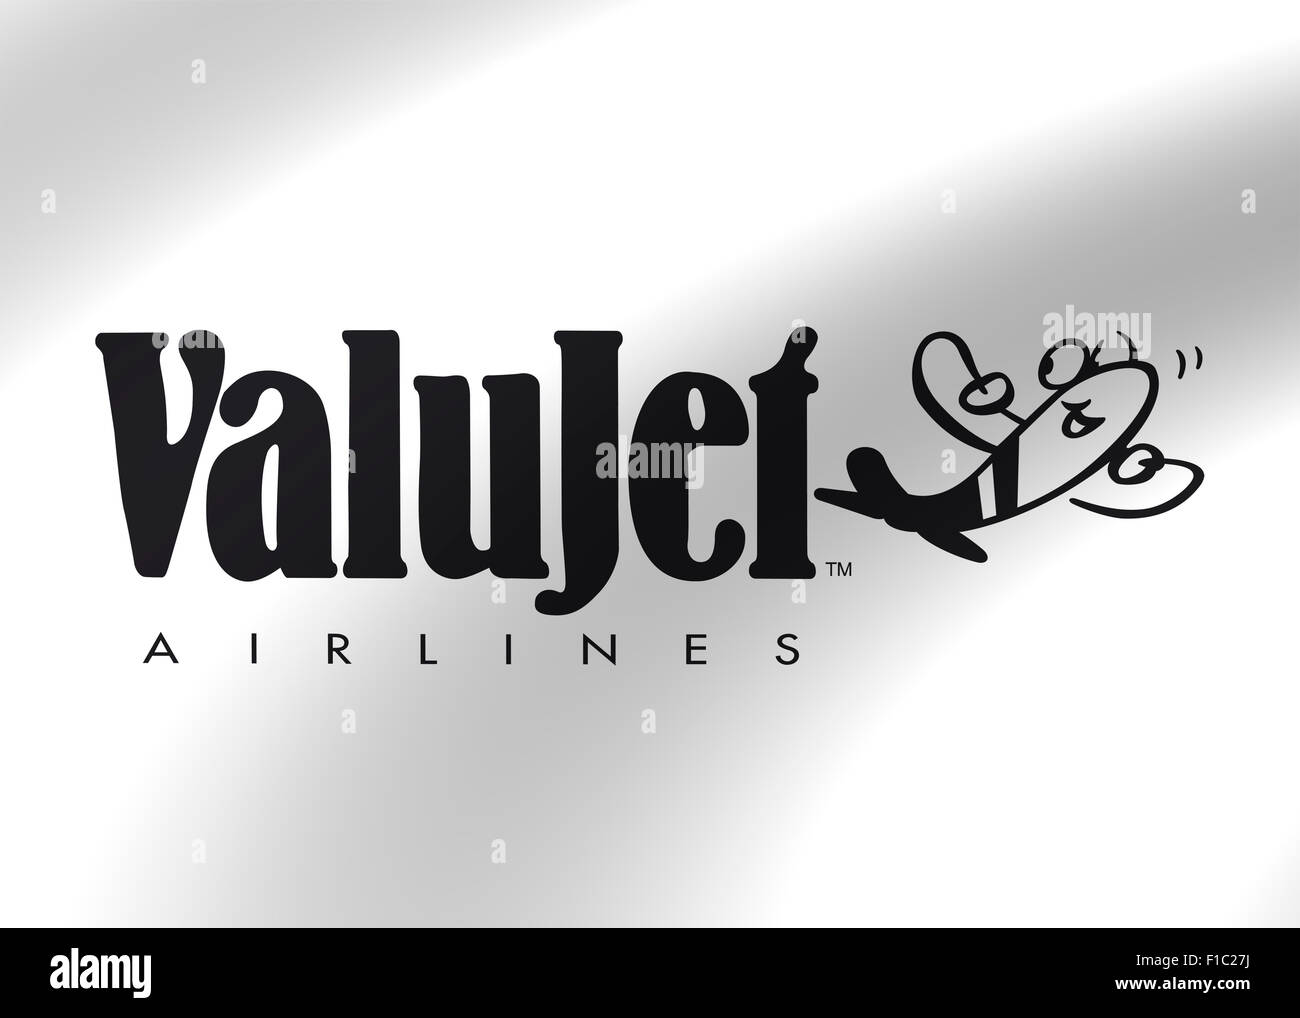 Valujet Airlines logo icon flag symbol emblem sign Stock Photo